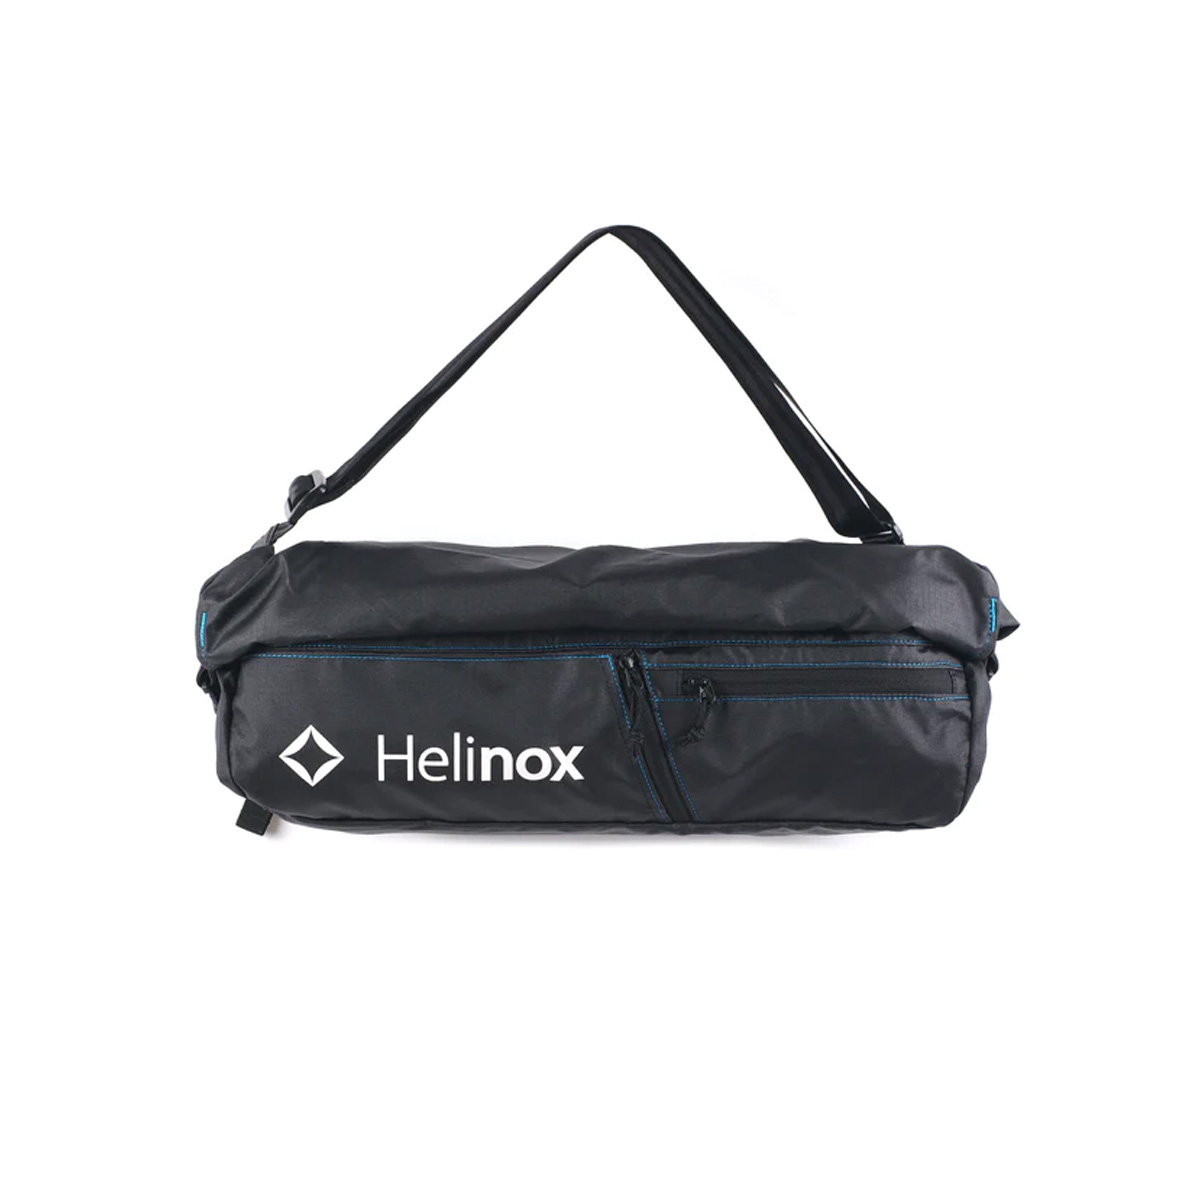 Helinox Sling Transport Bag